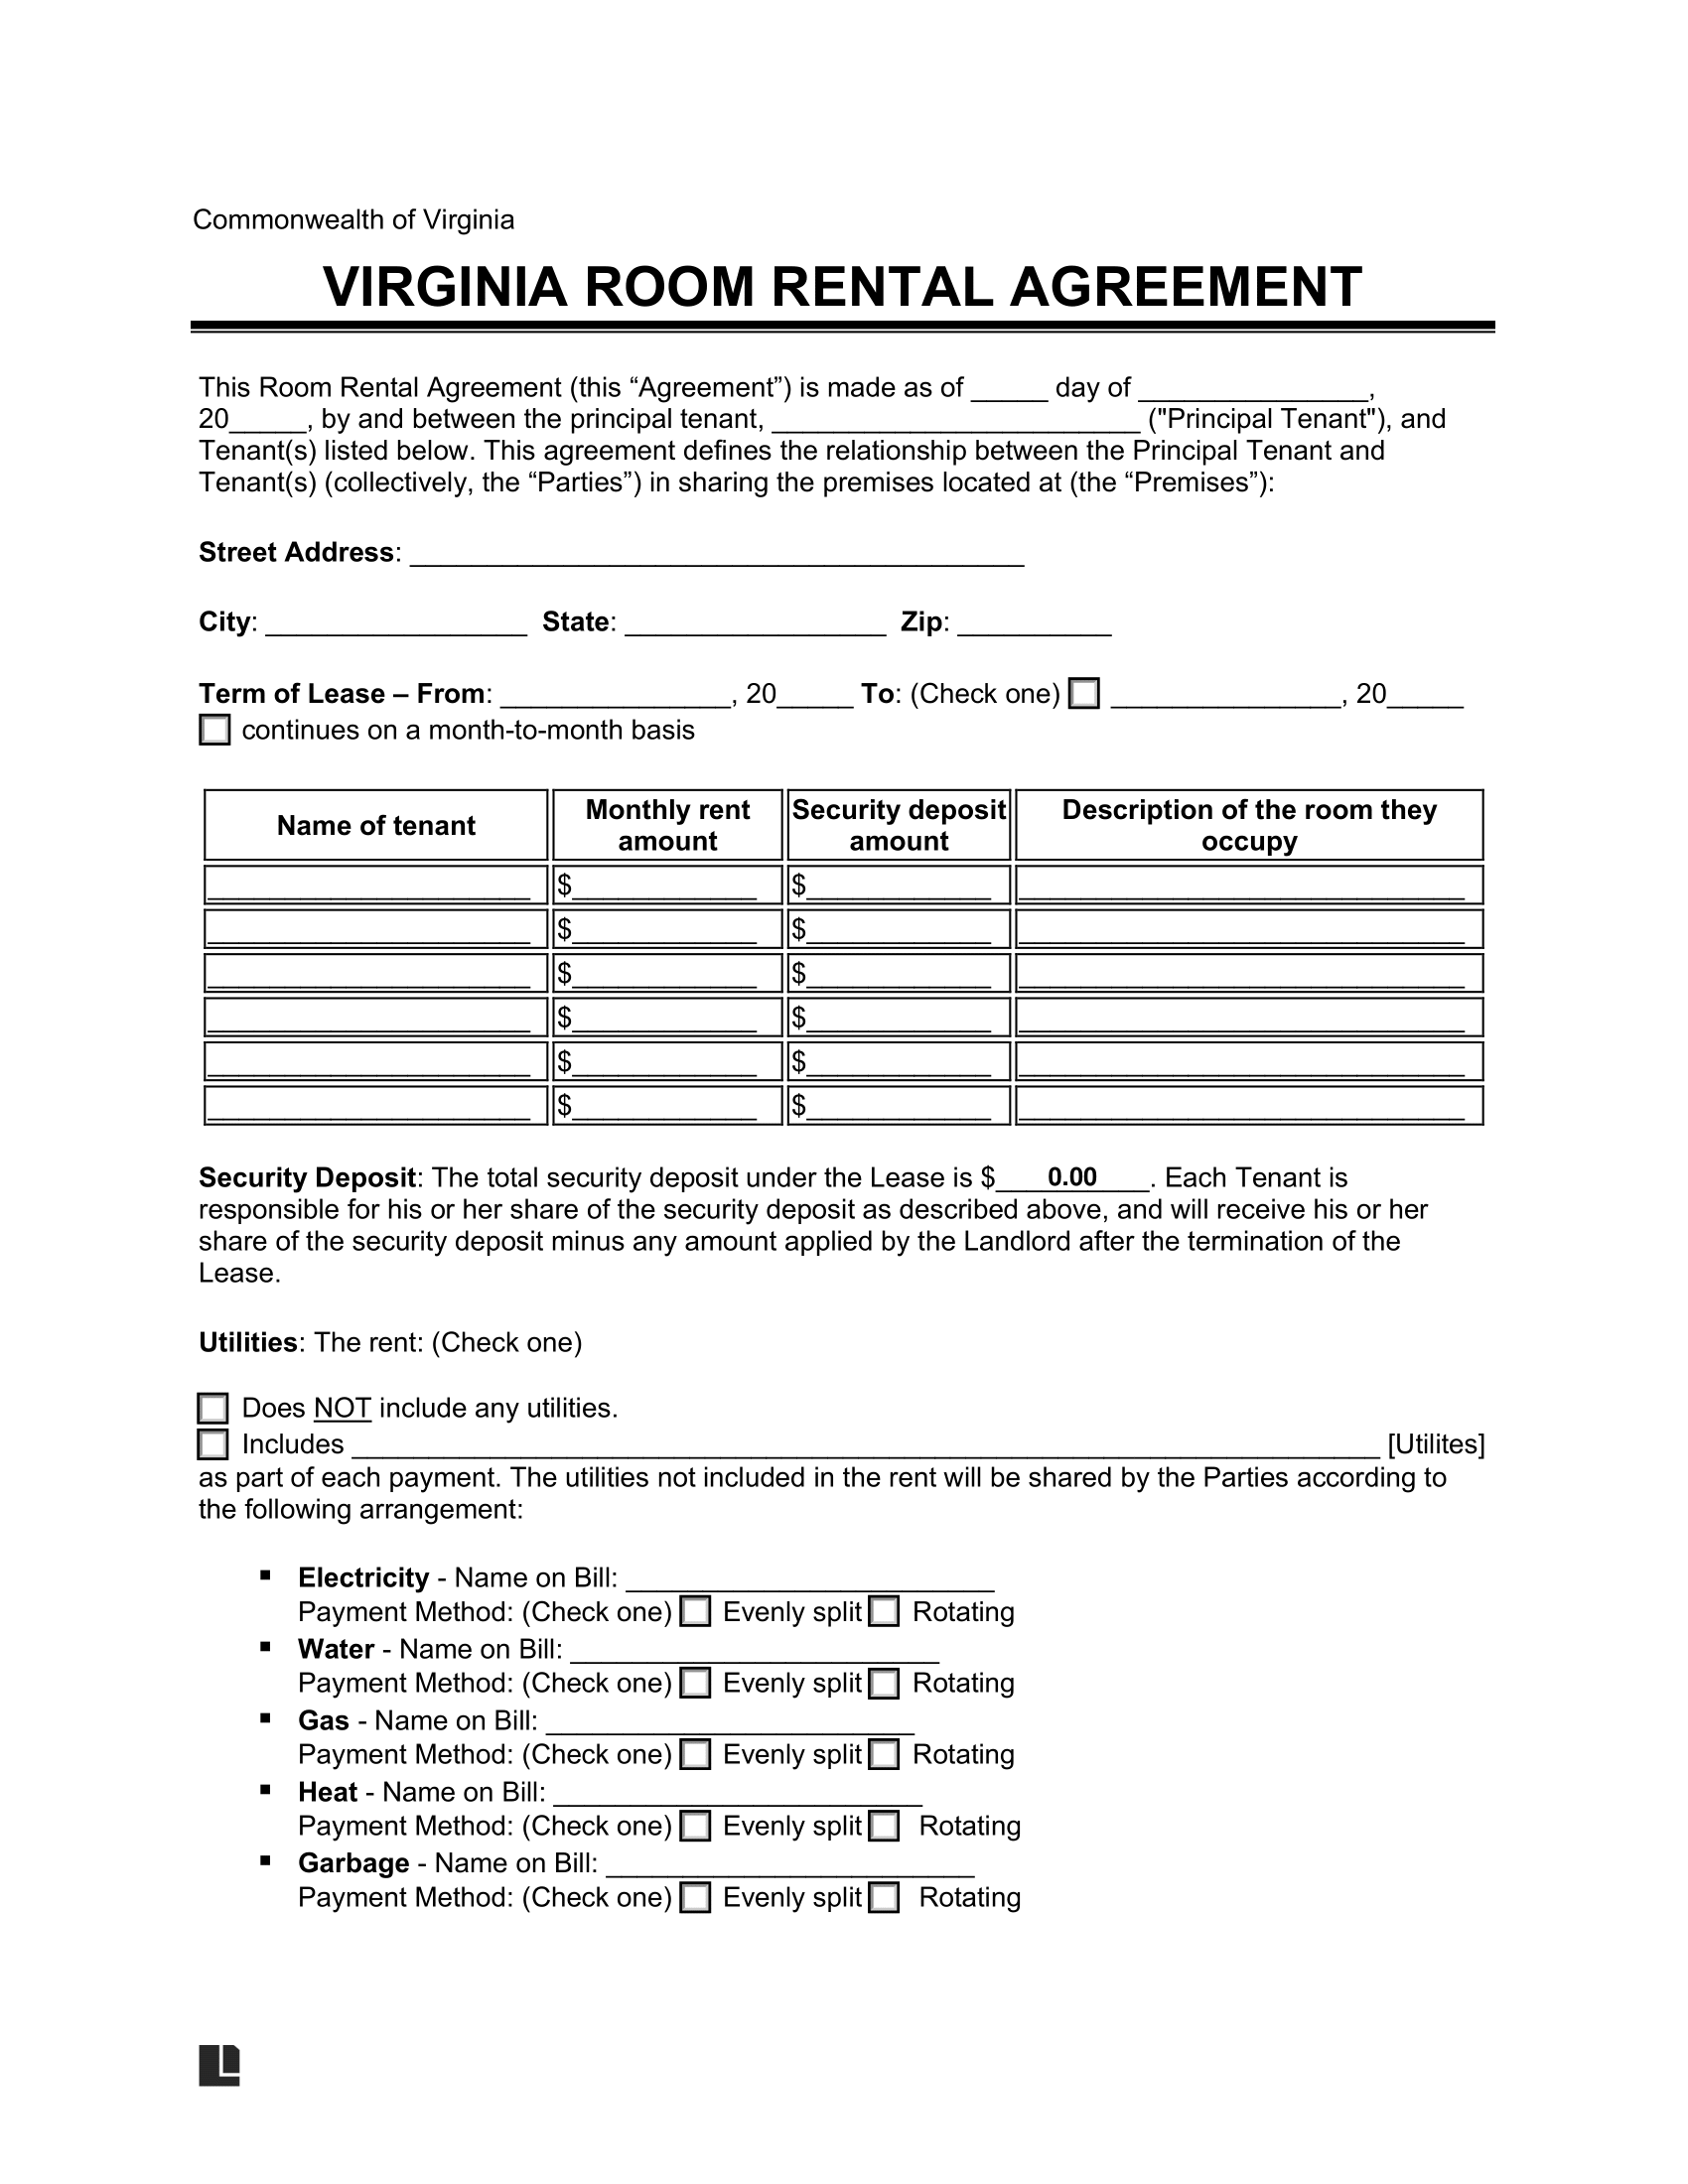 Virginia Room Rental Agreement